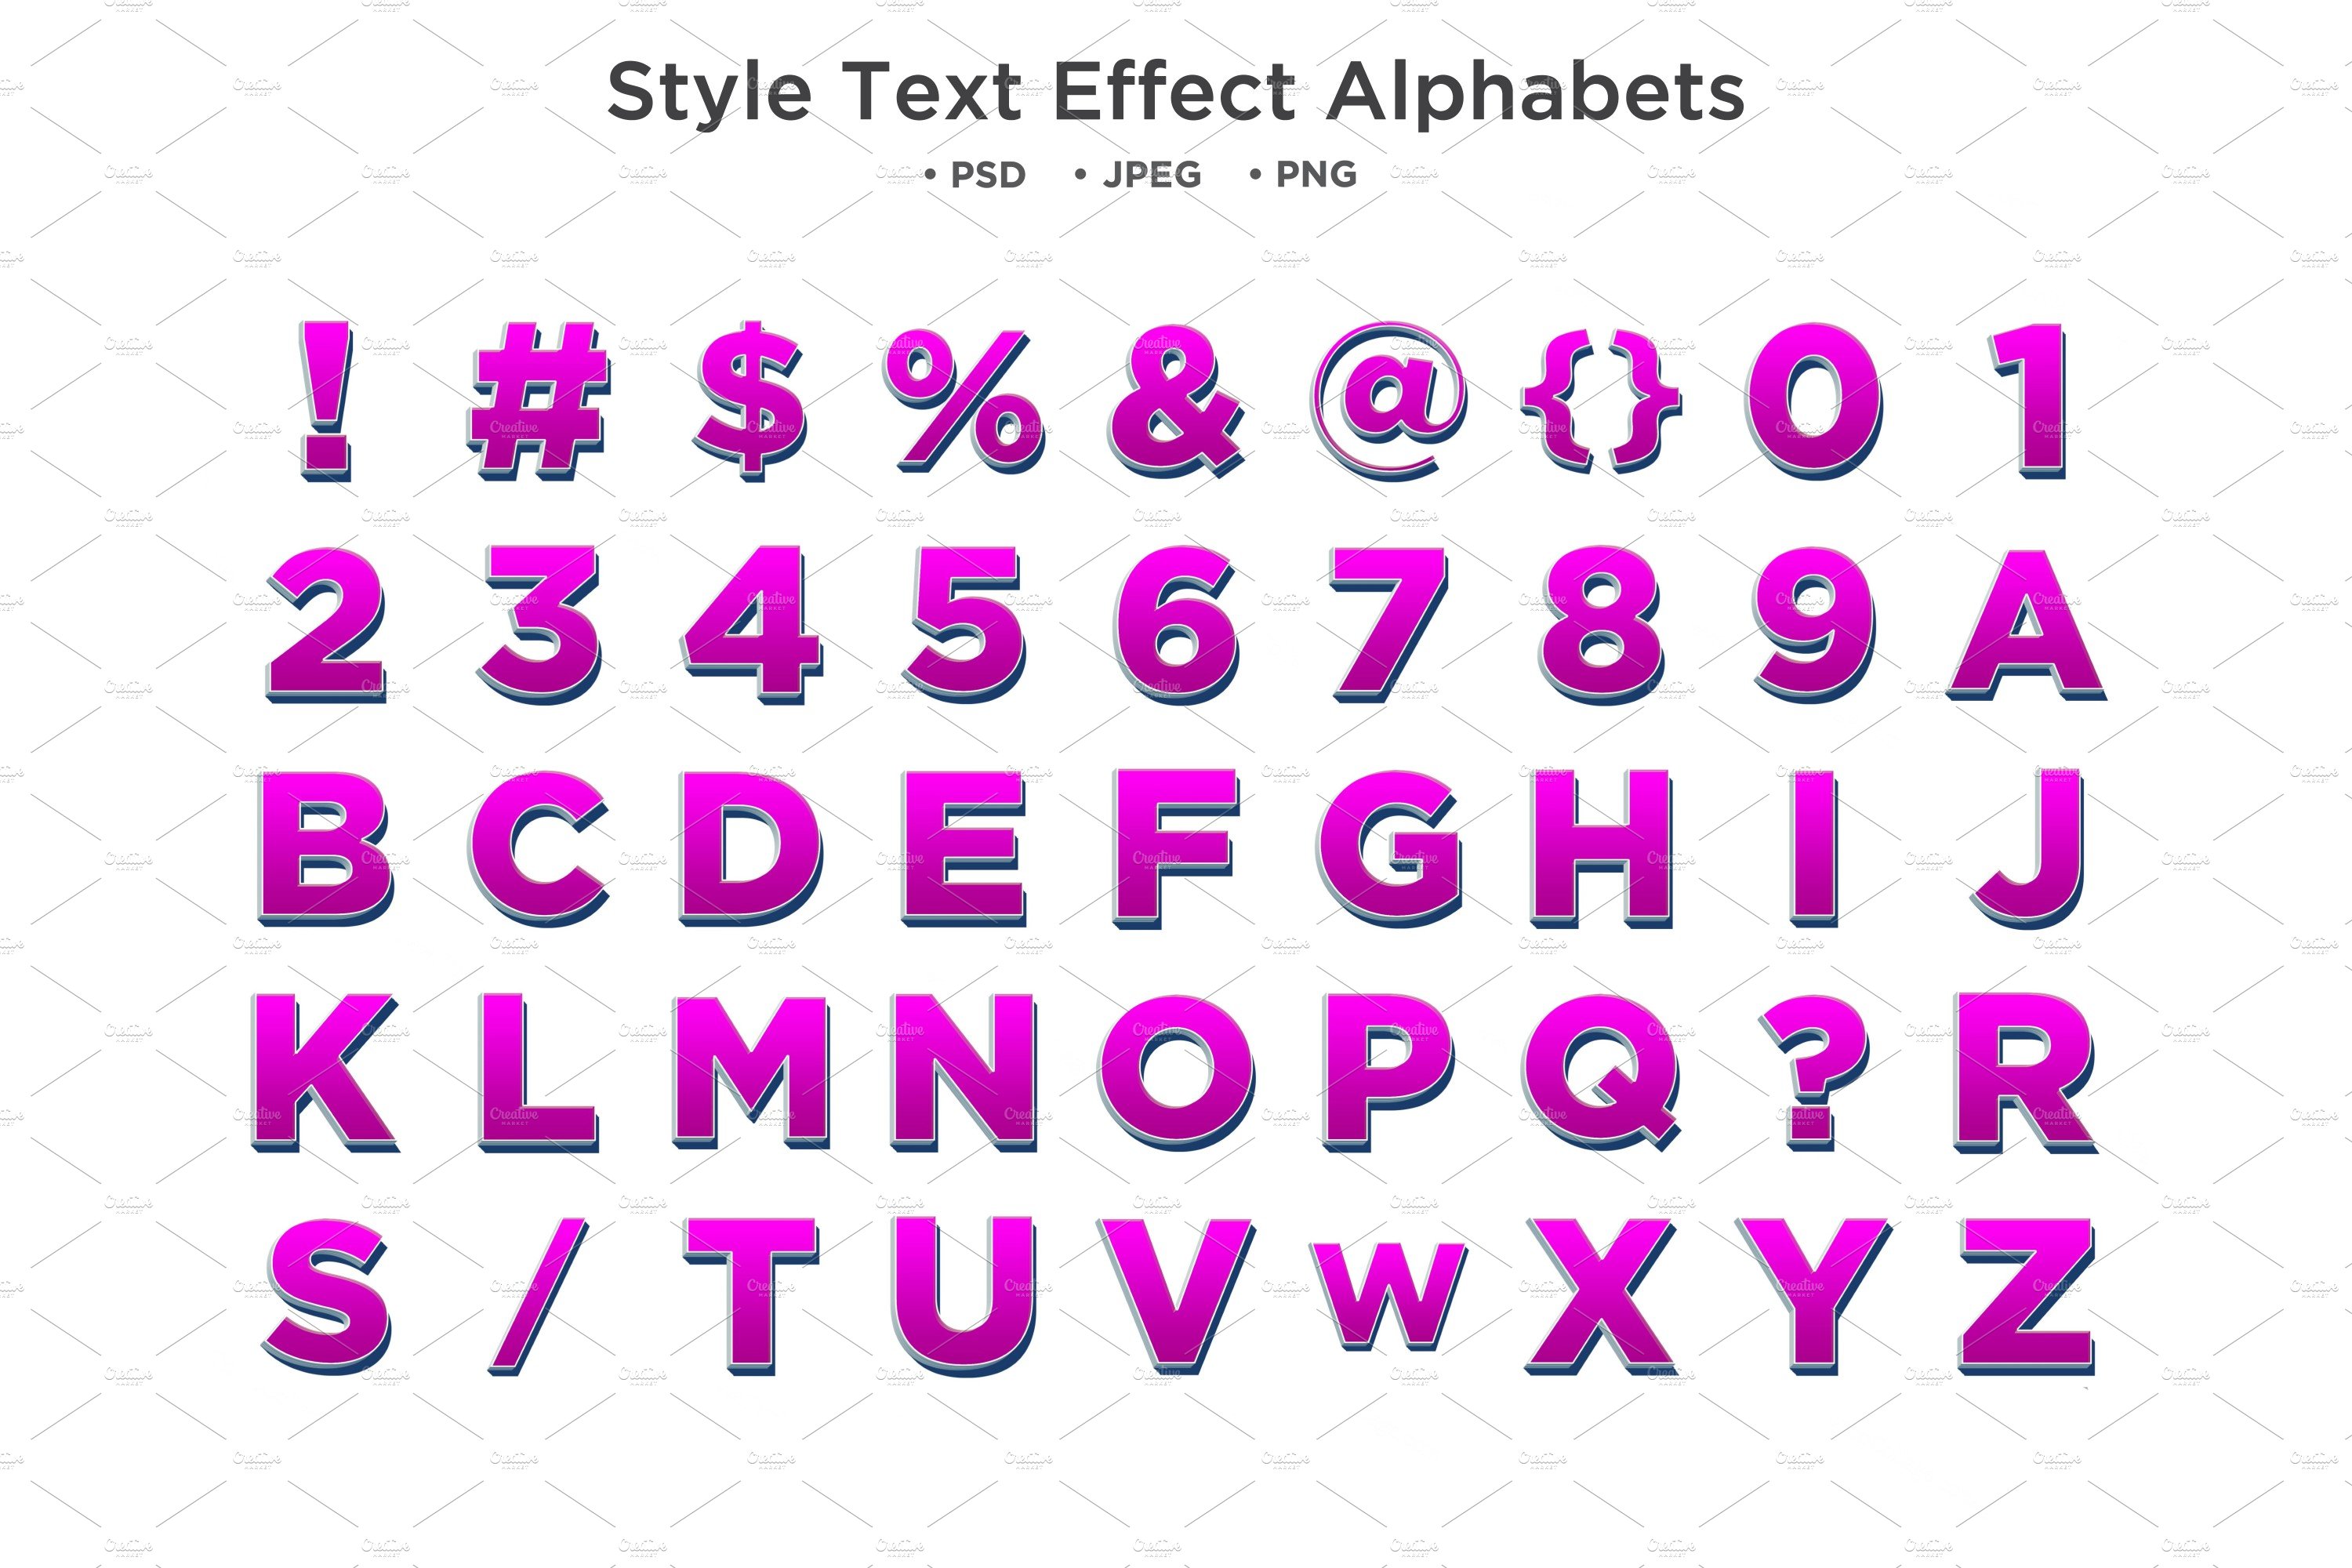 Style Text Alphabet, Abc Typographycover image.